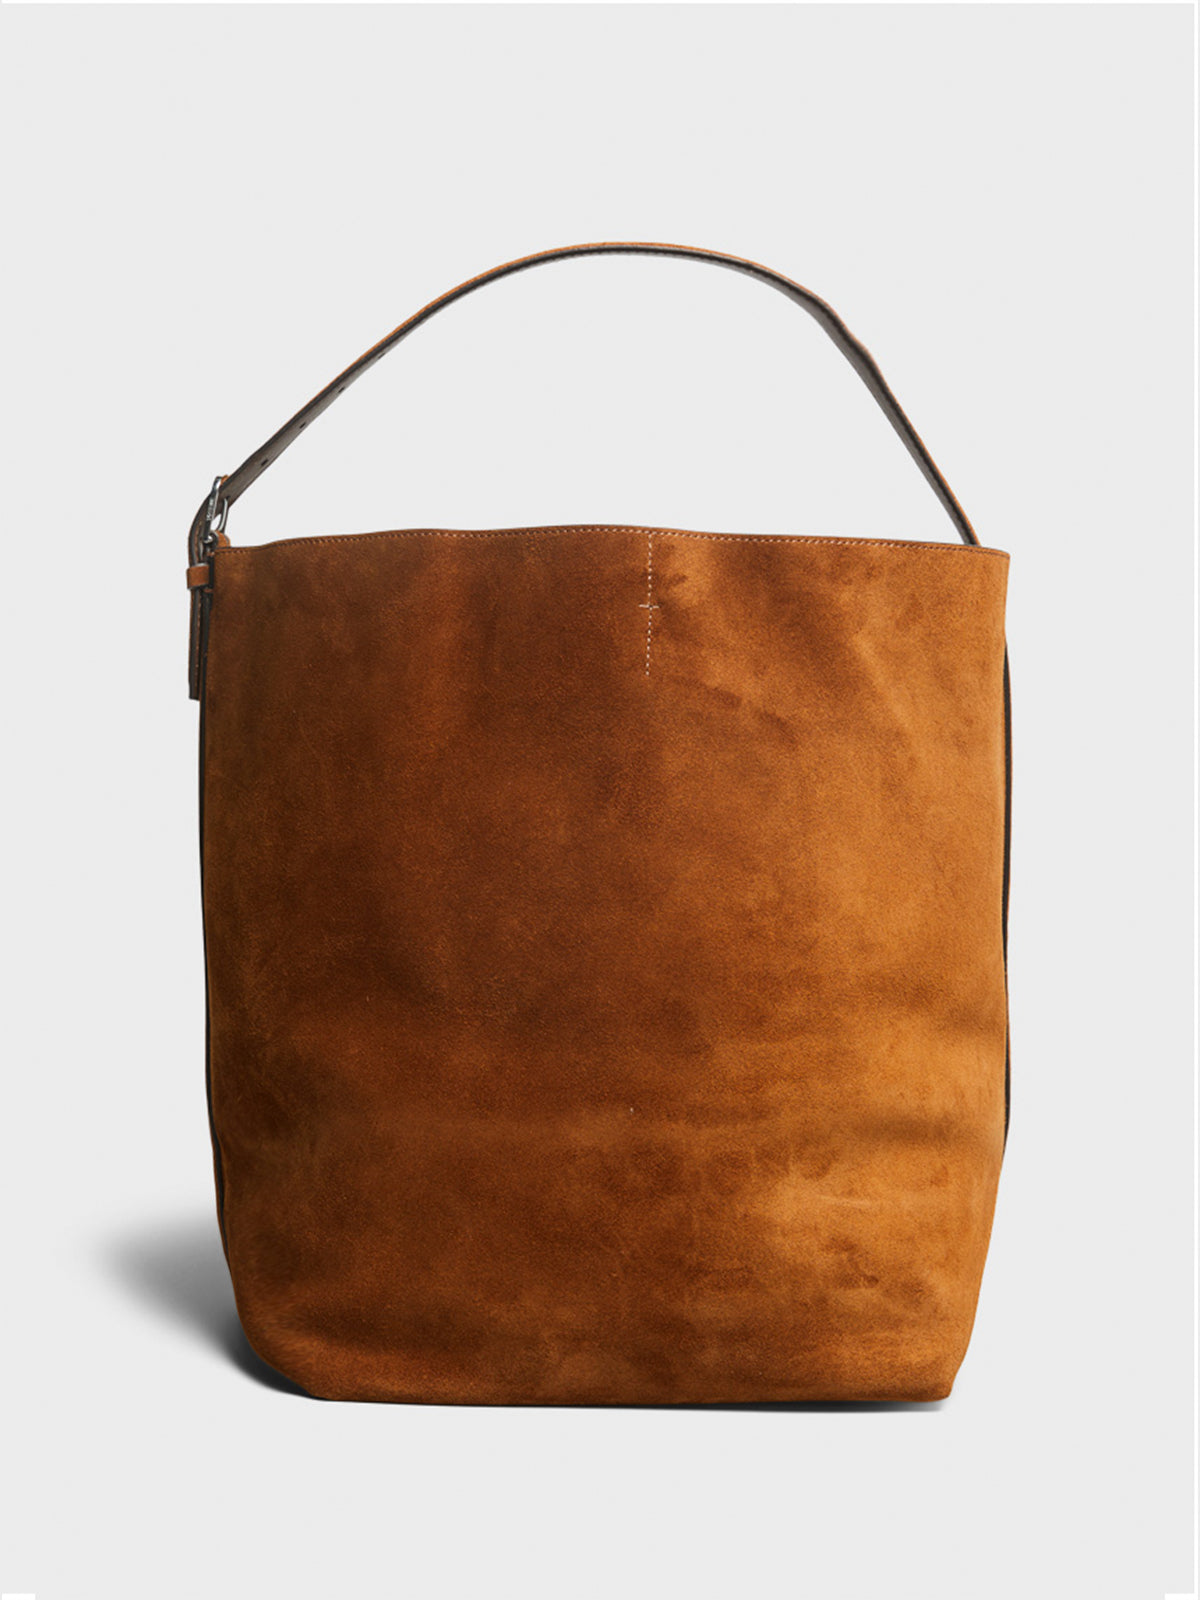 TOTEME - Belted Tote Bag in Tan Brown